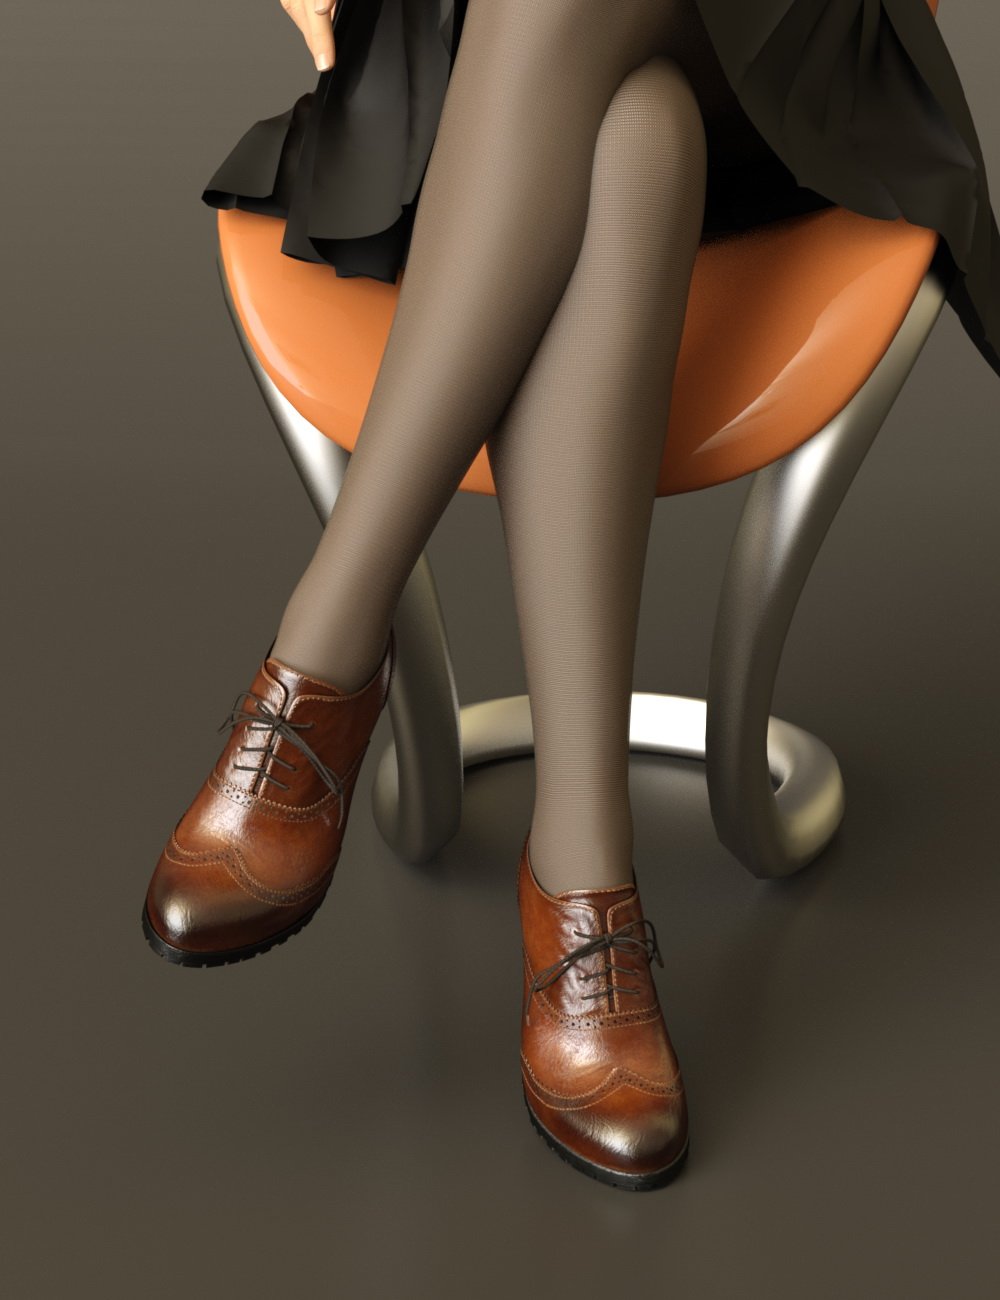 Angela Heel for Genesis 8 Female(s) by: chungdan, 3D Models by Daz 3D